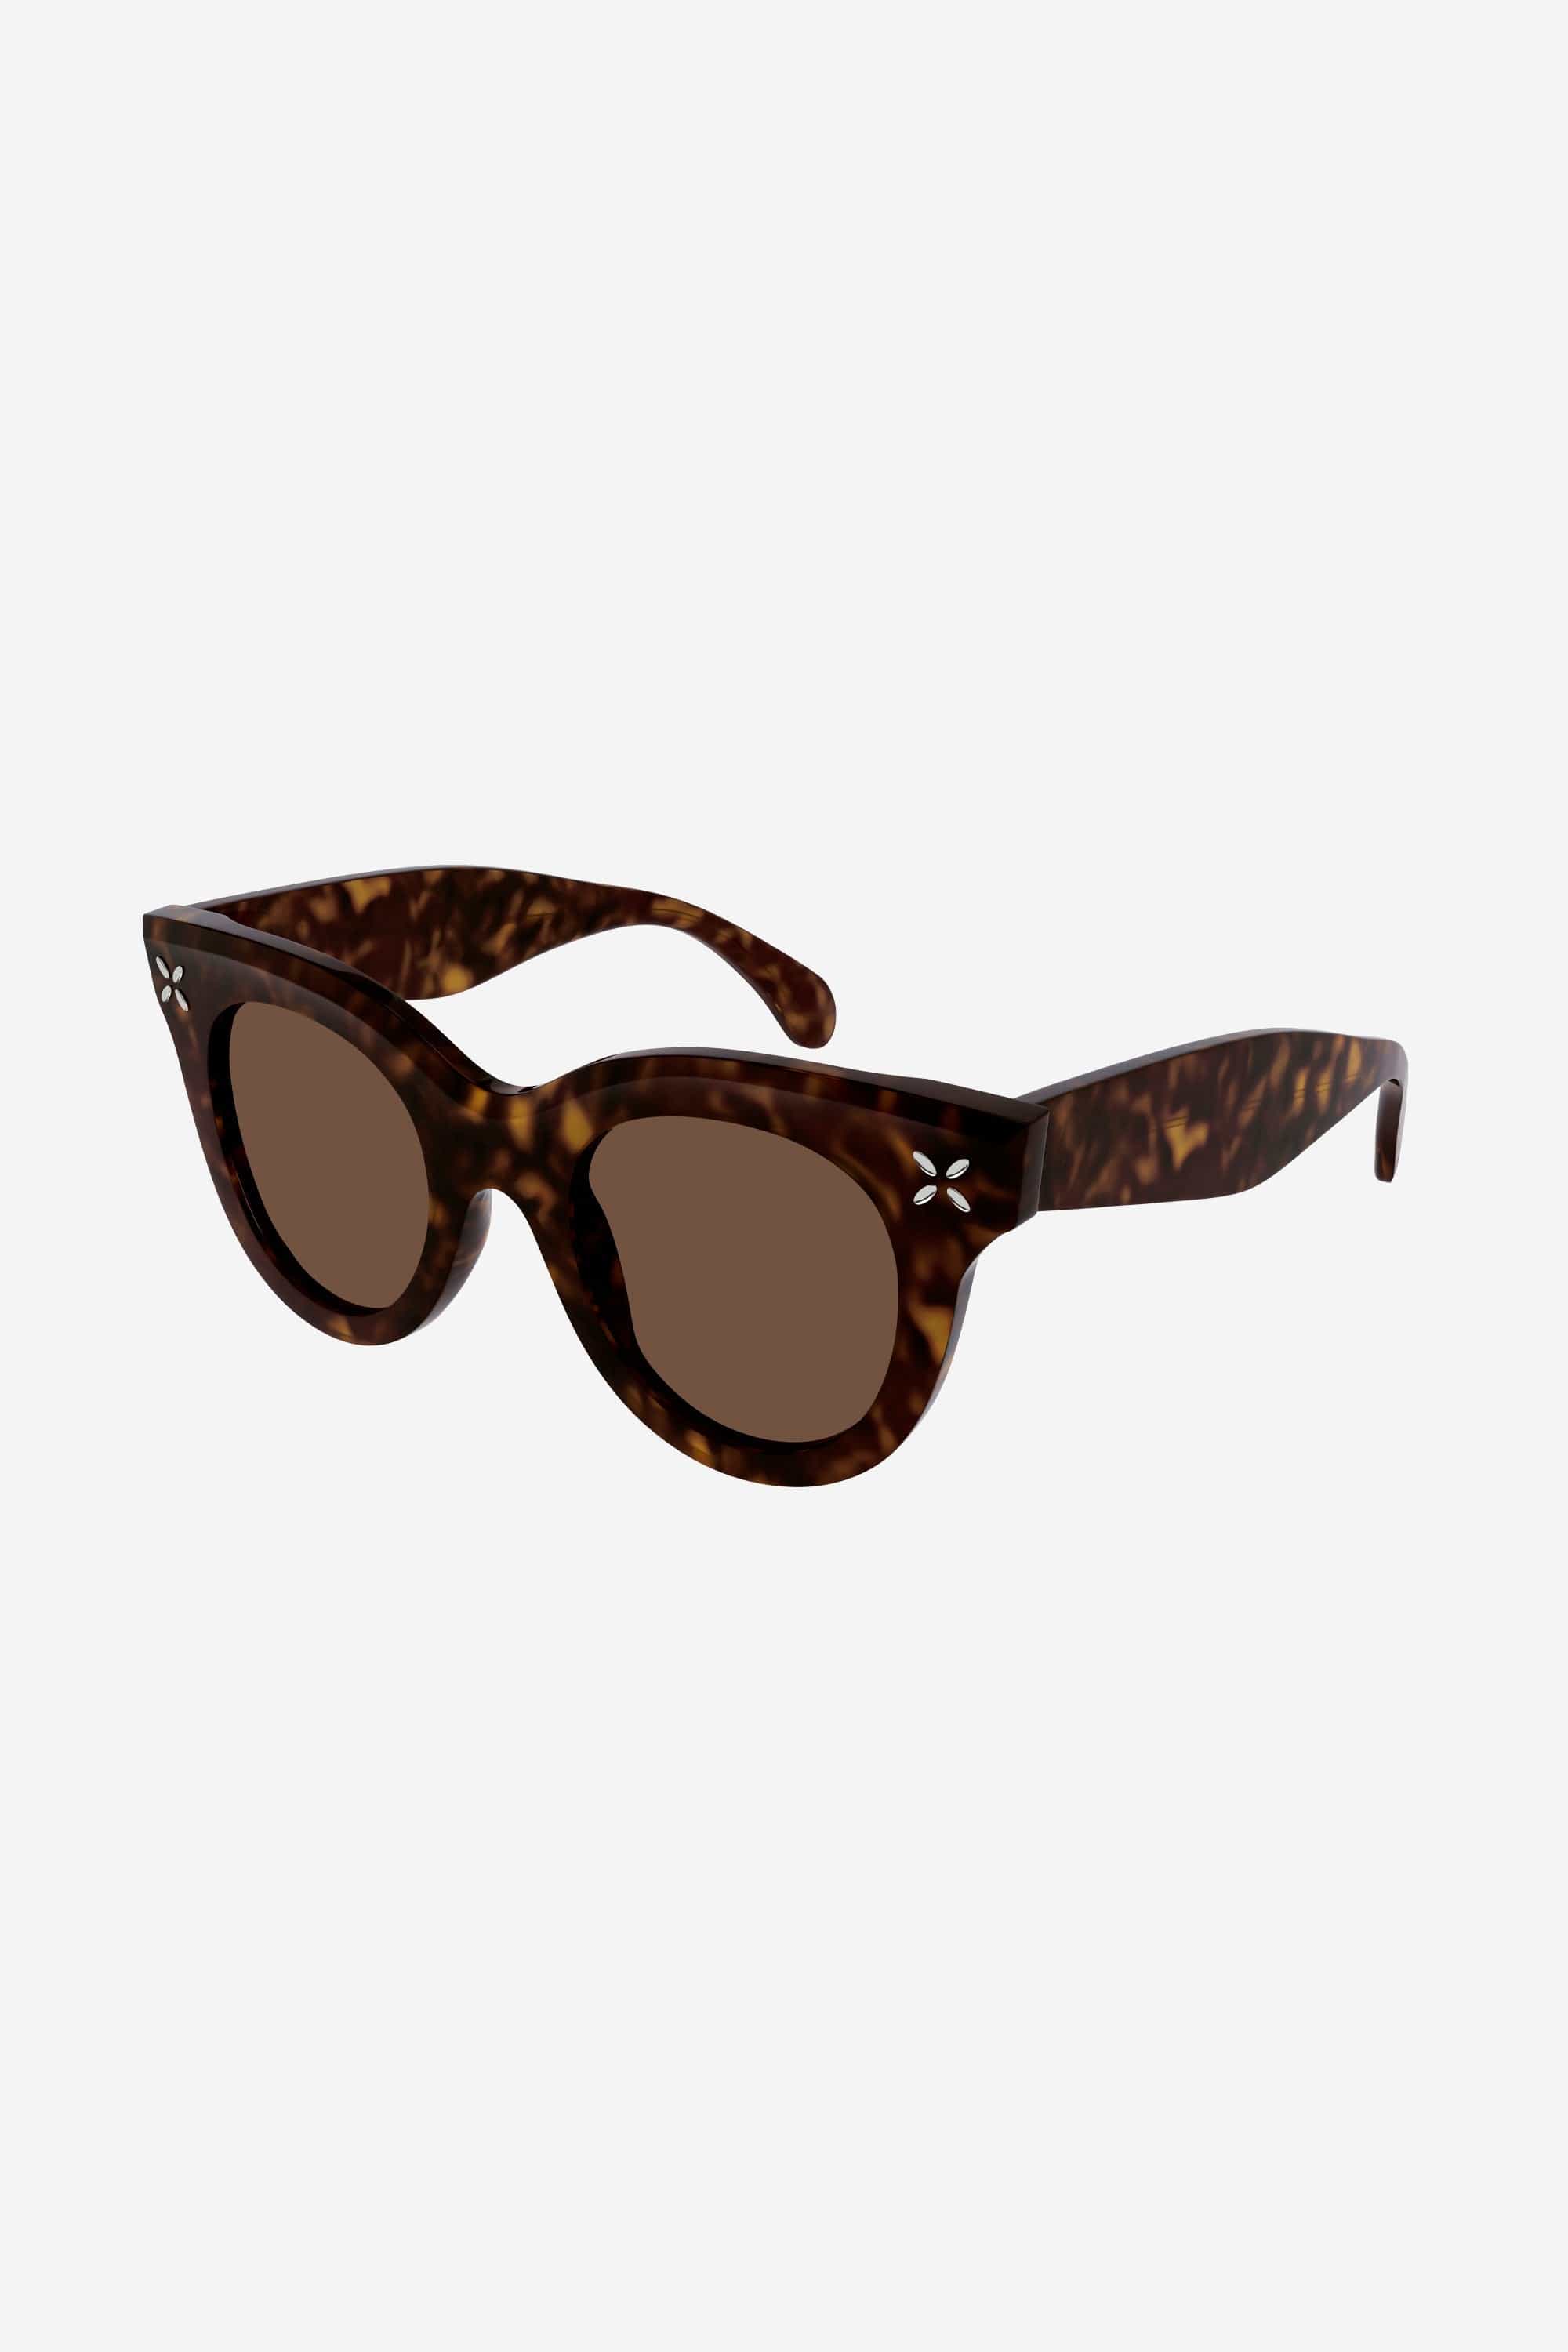 Alaia havana cat eye sunglasses - Eyewear Club